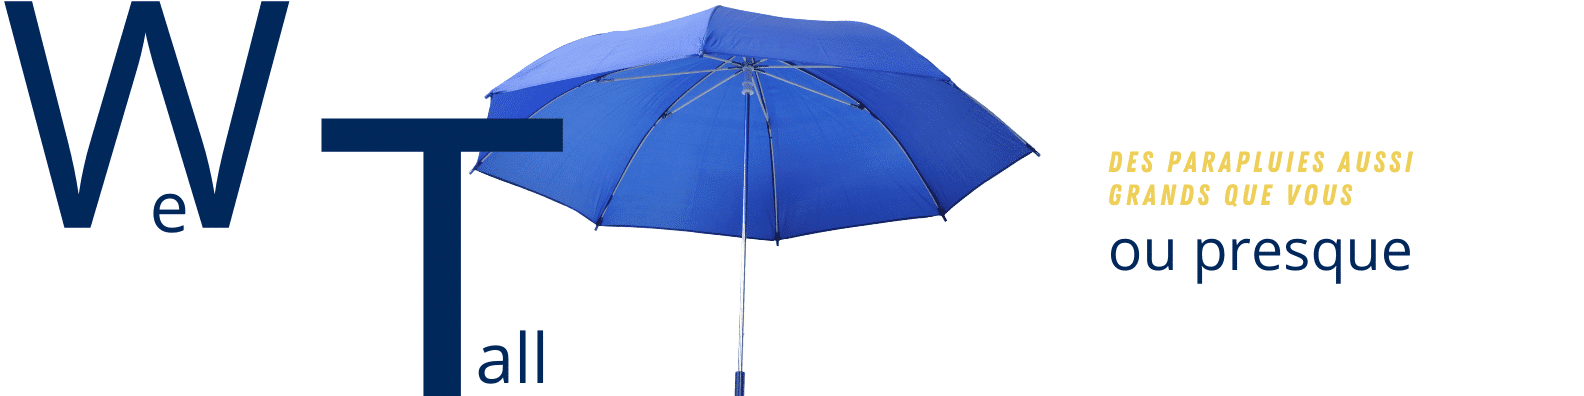 Parapluie grande taille